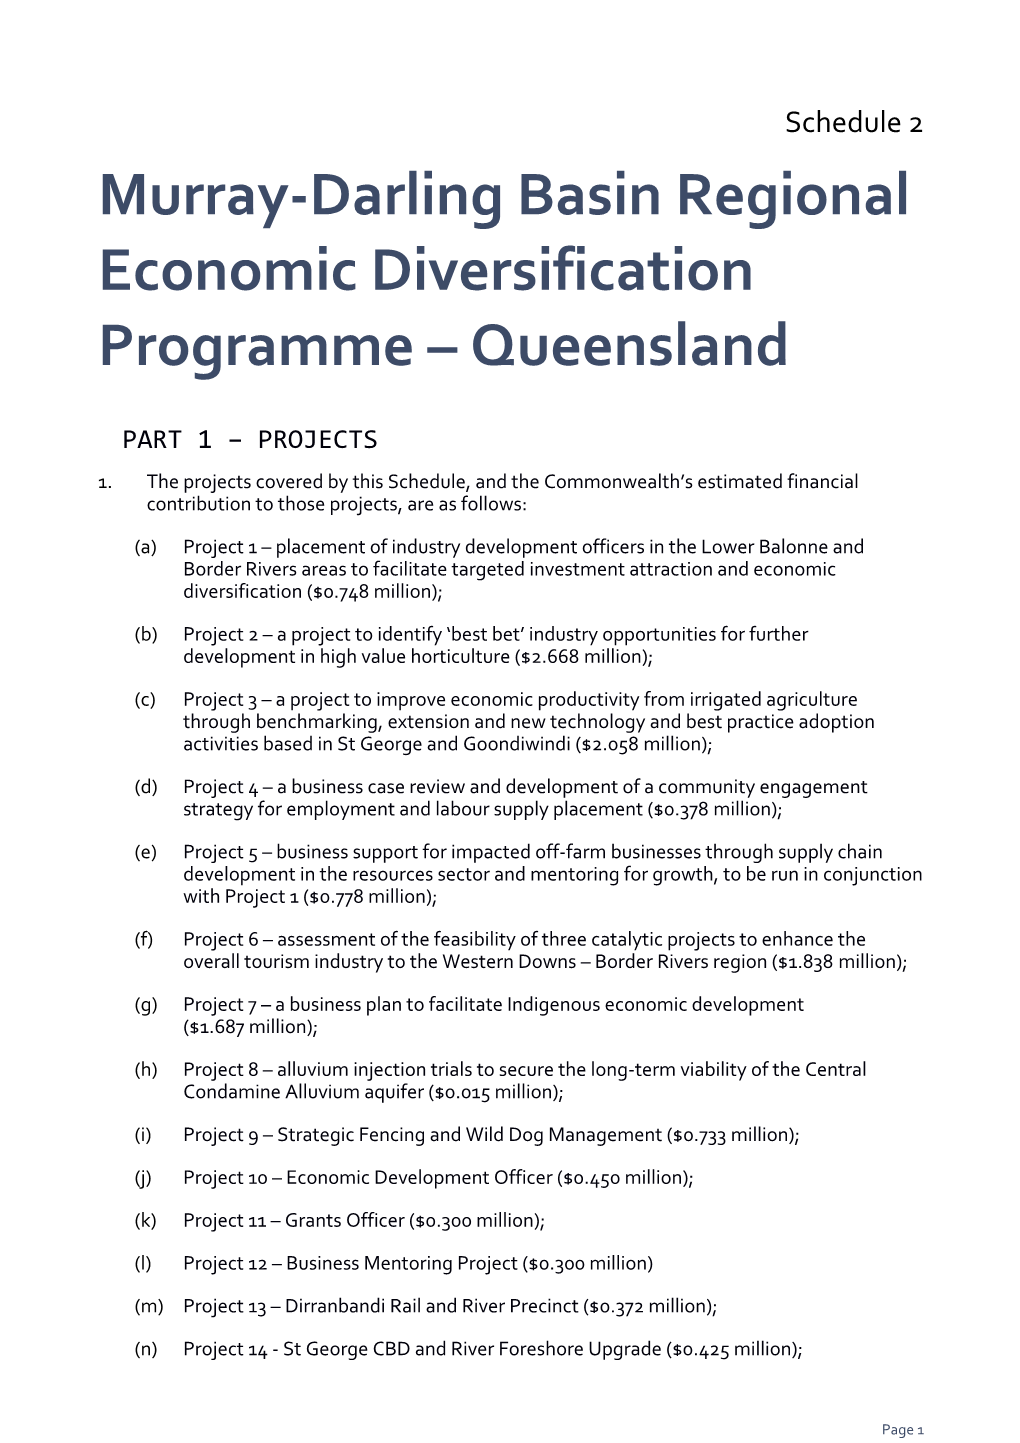 Murray-Darling Basin Regionaleconomic Diversification Programme Queensland